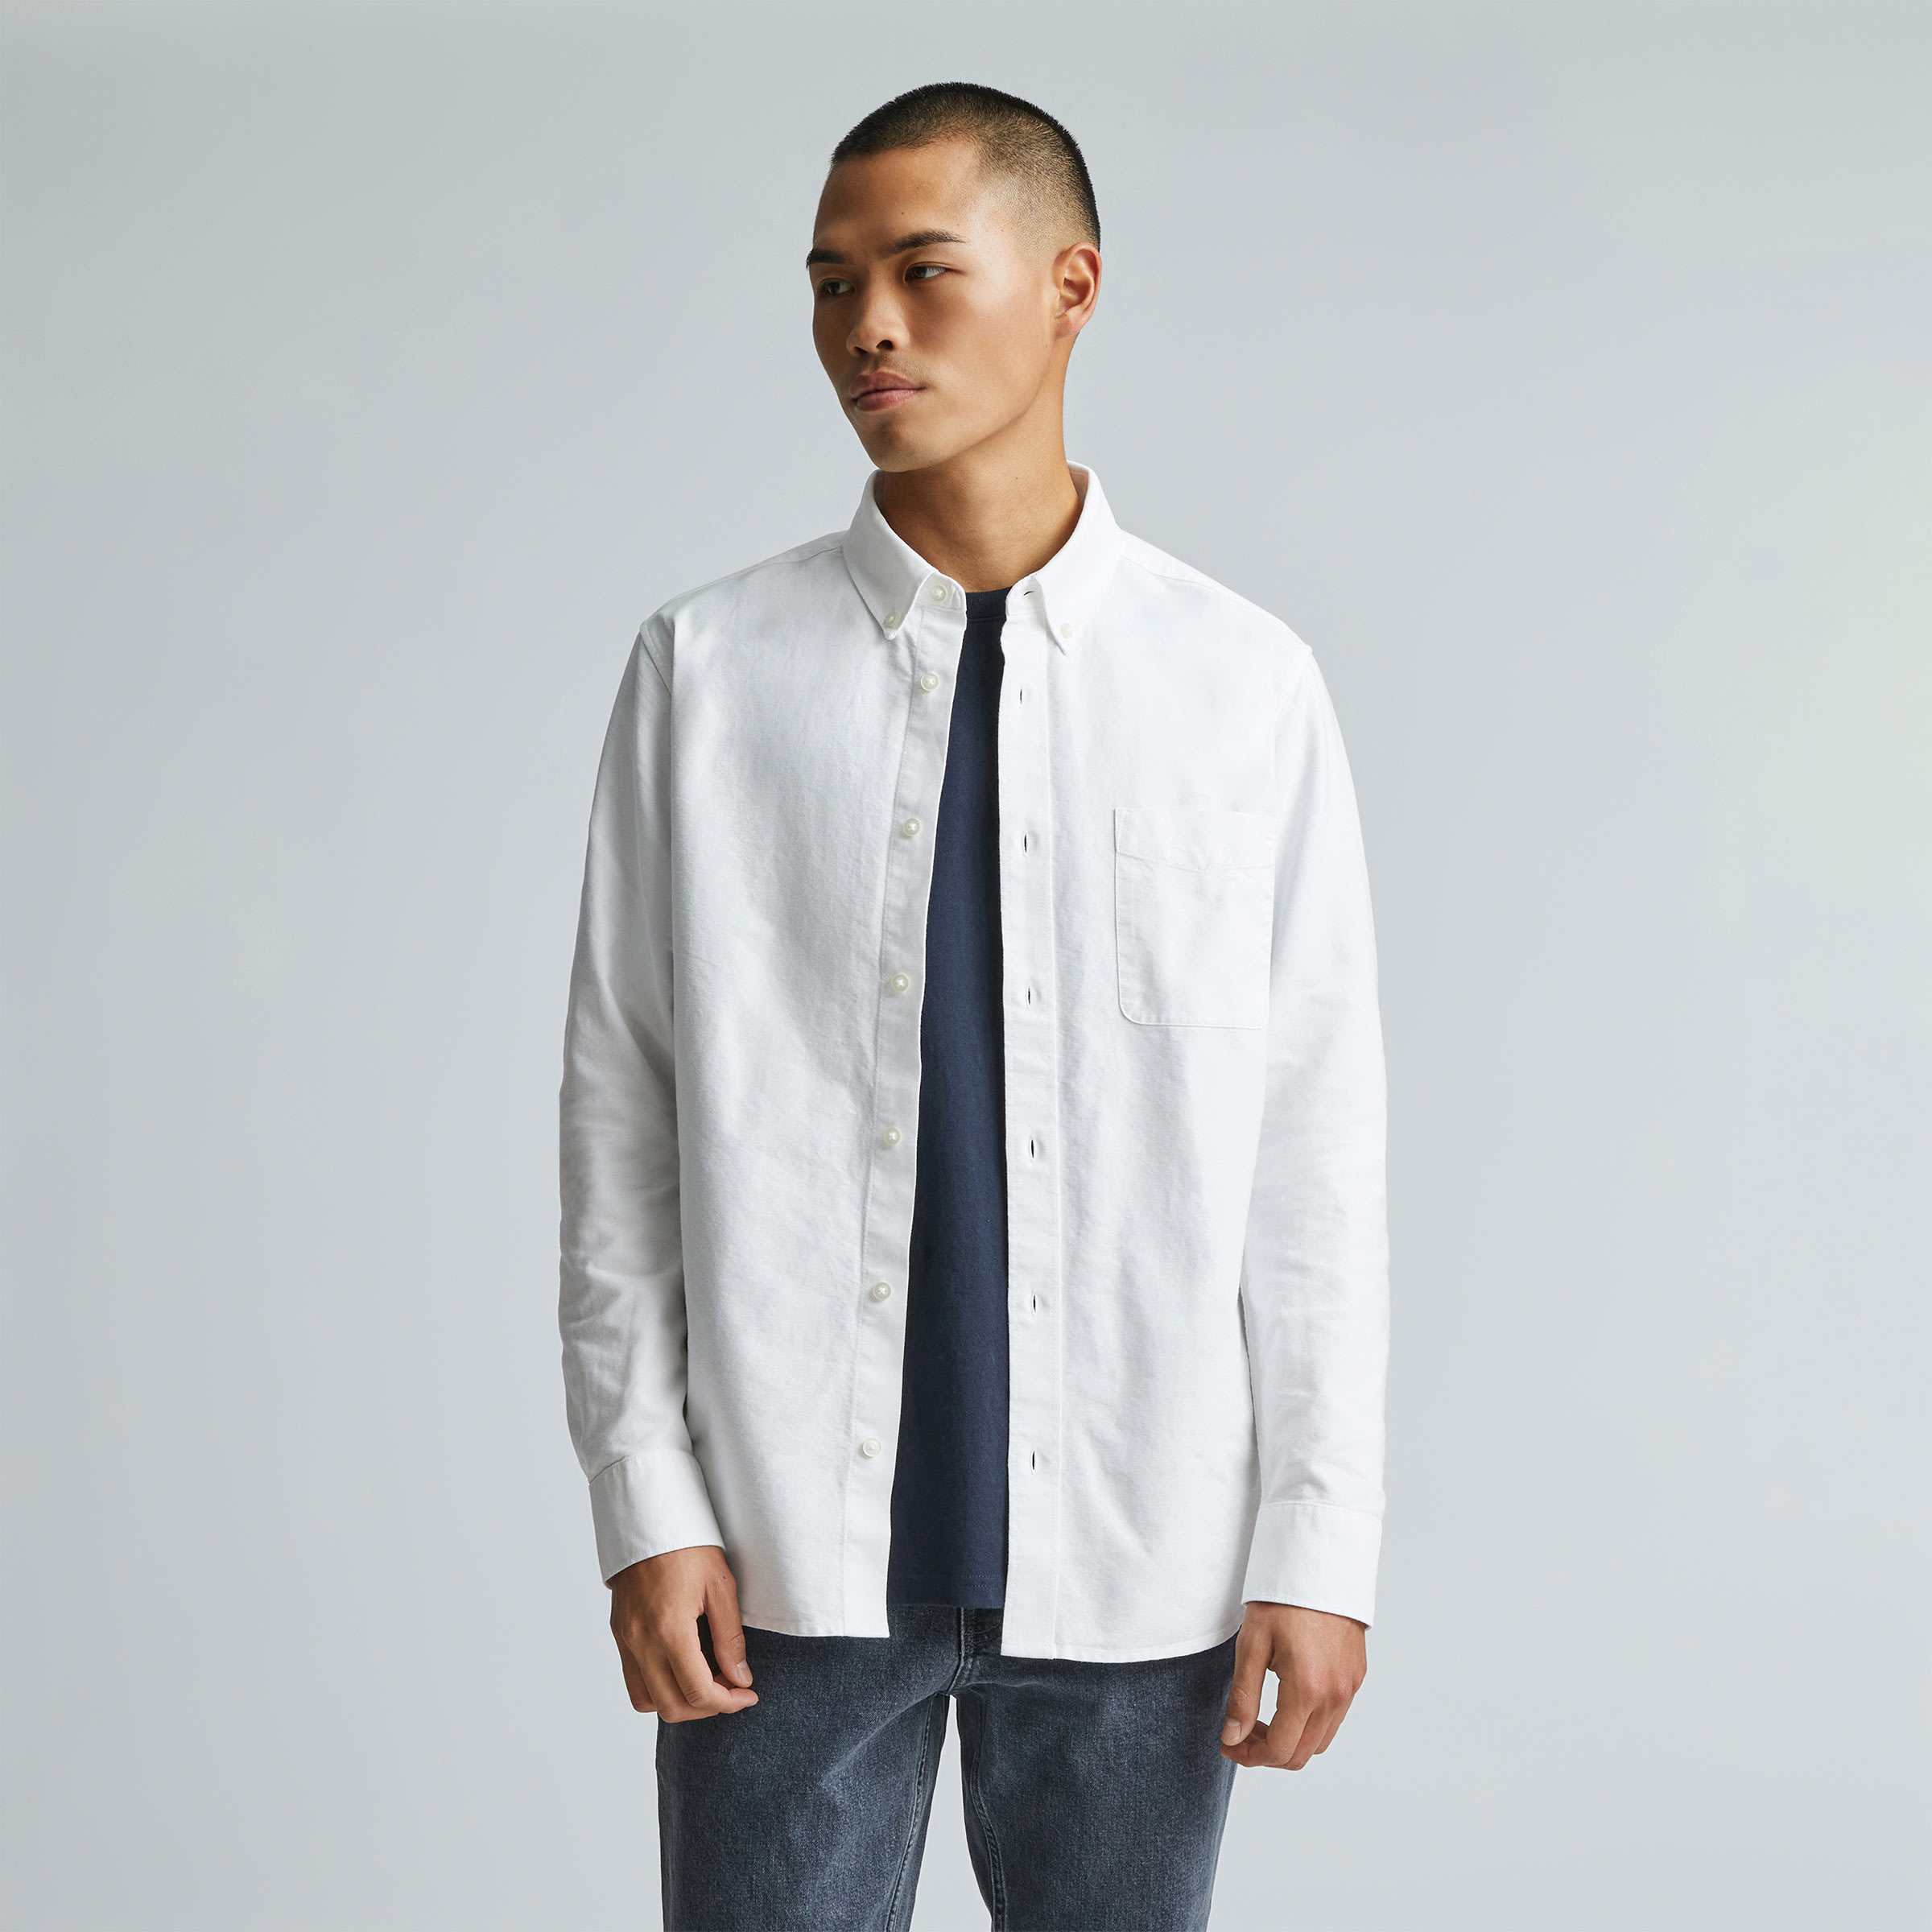 Men's Oxford Shirt White - Organic Cotton